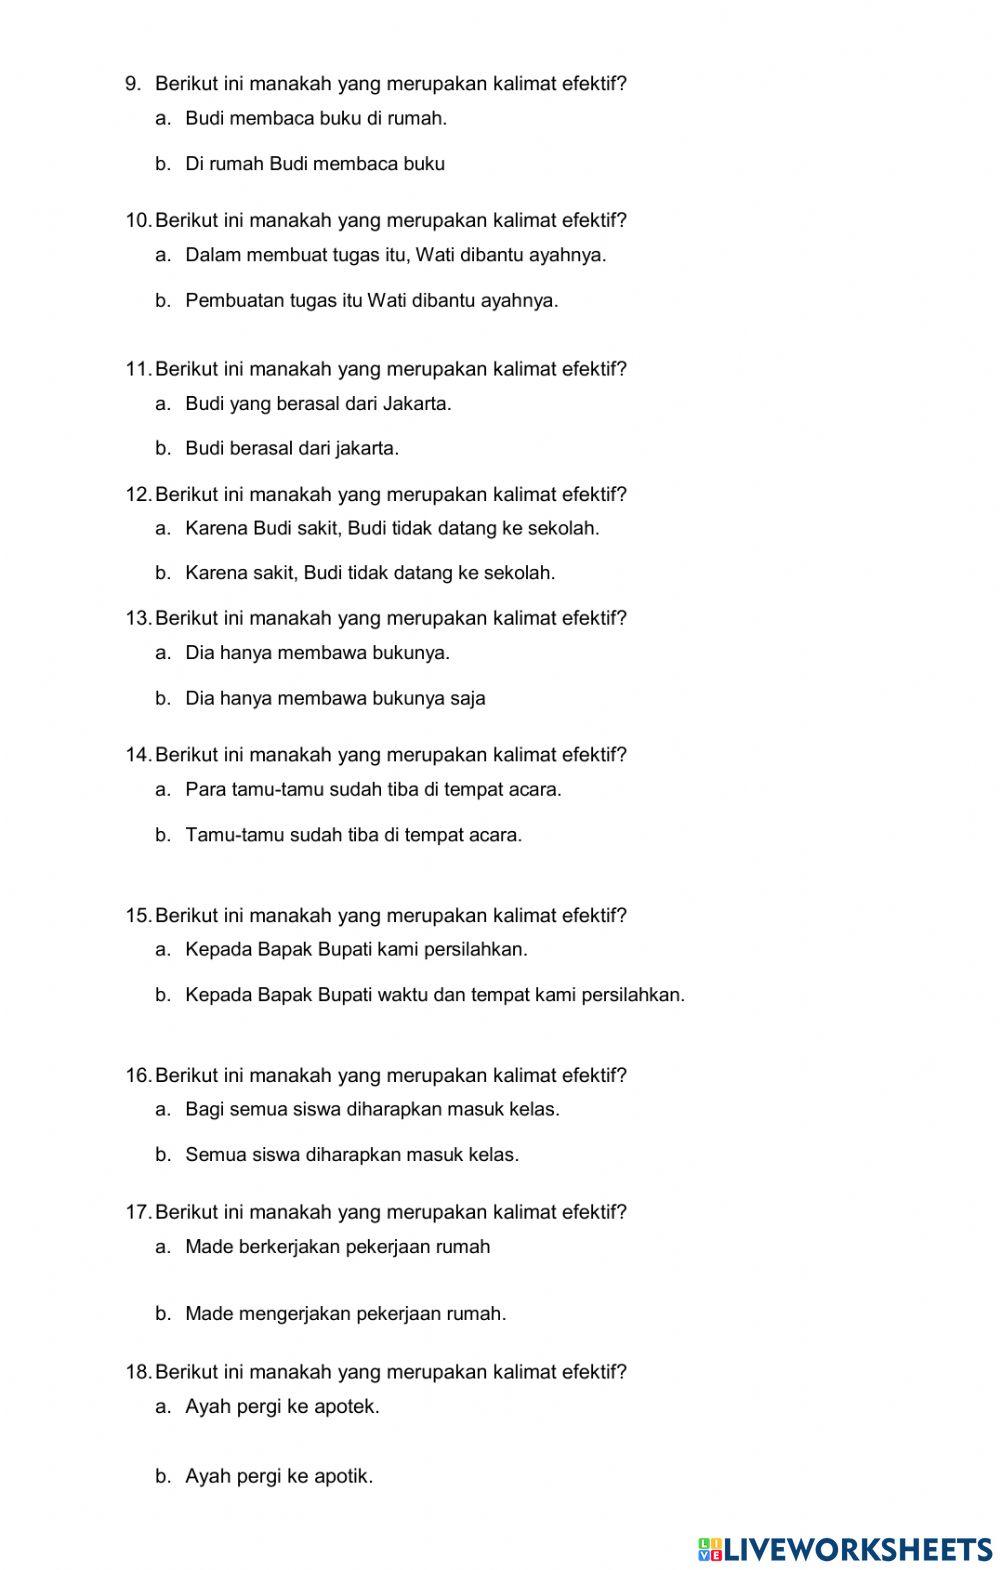 Soal evaluasi bahasa indonesia kalimat efektif